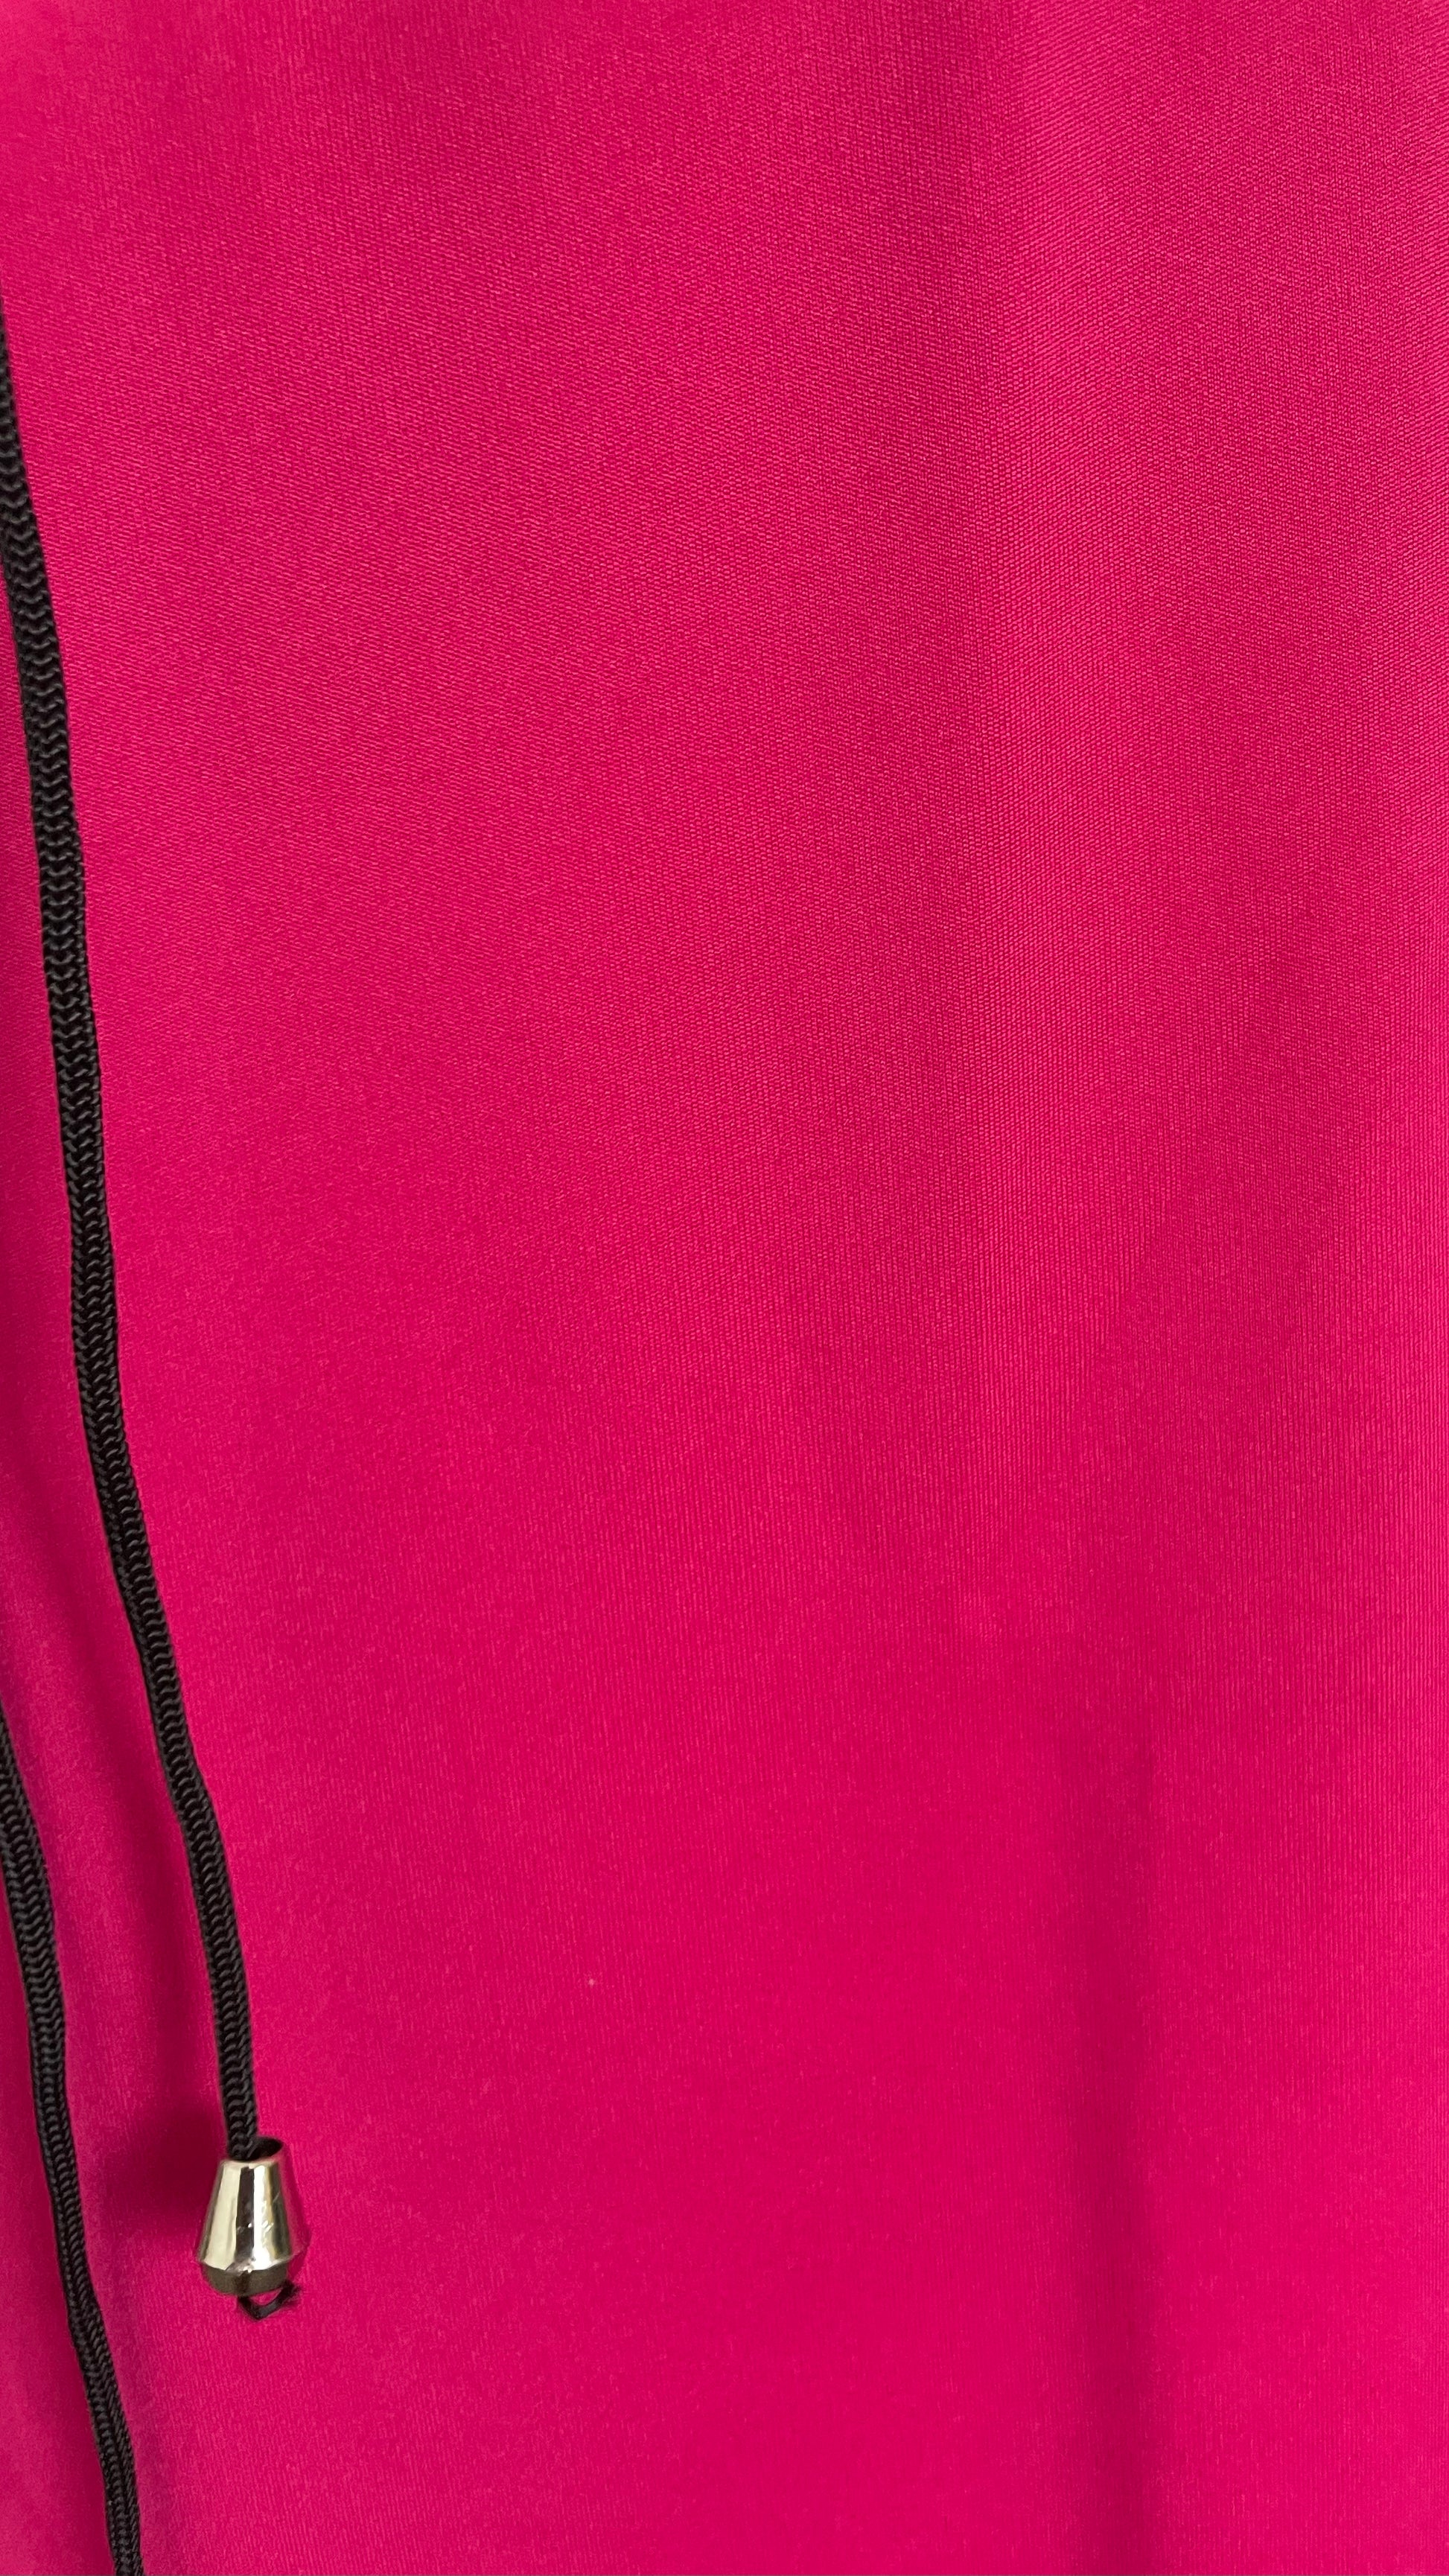 Buy Saree Shapewear Saree Petticoat Saree Skirt Saree Silhouette